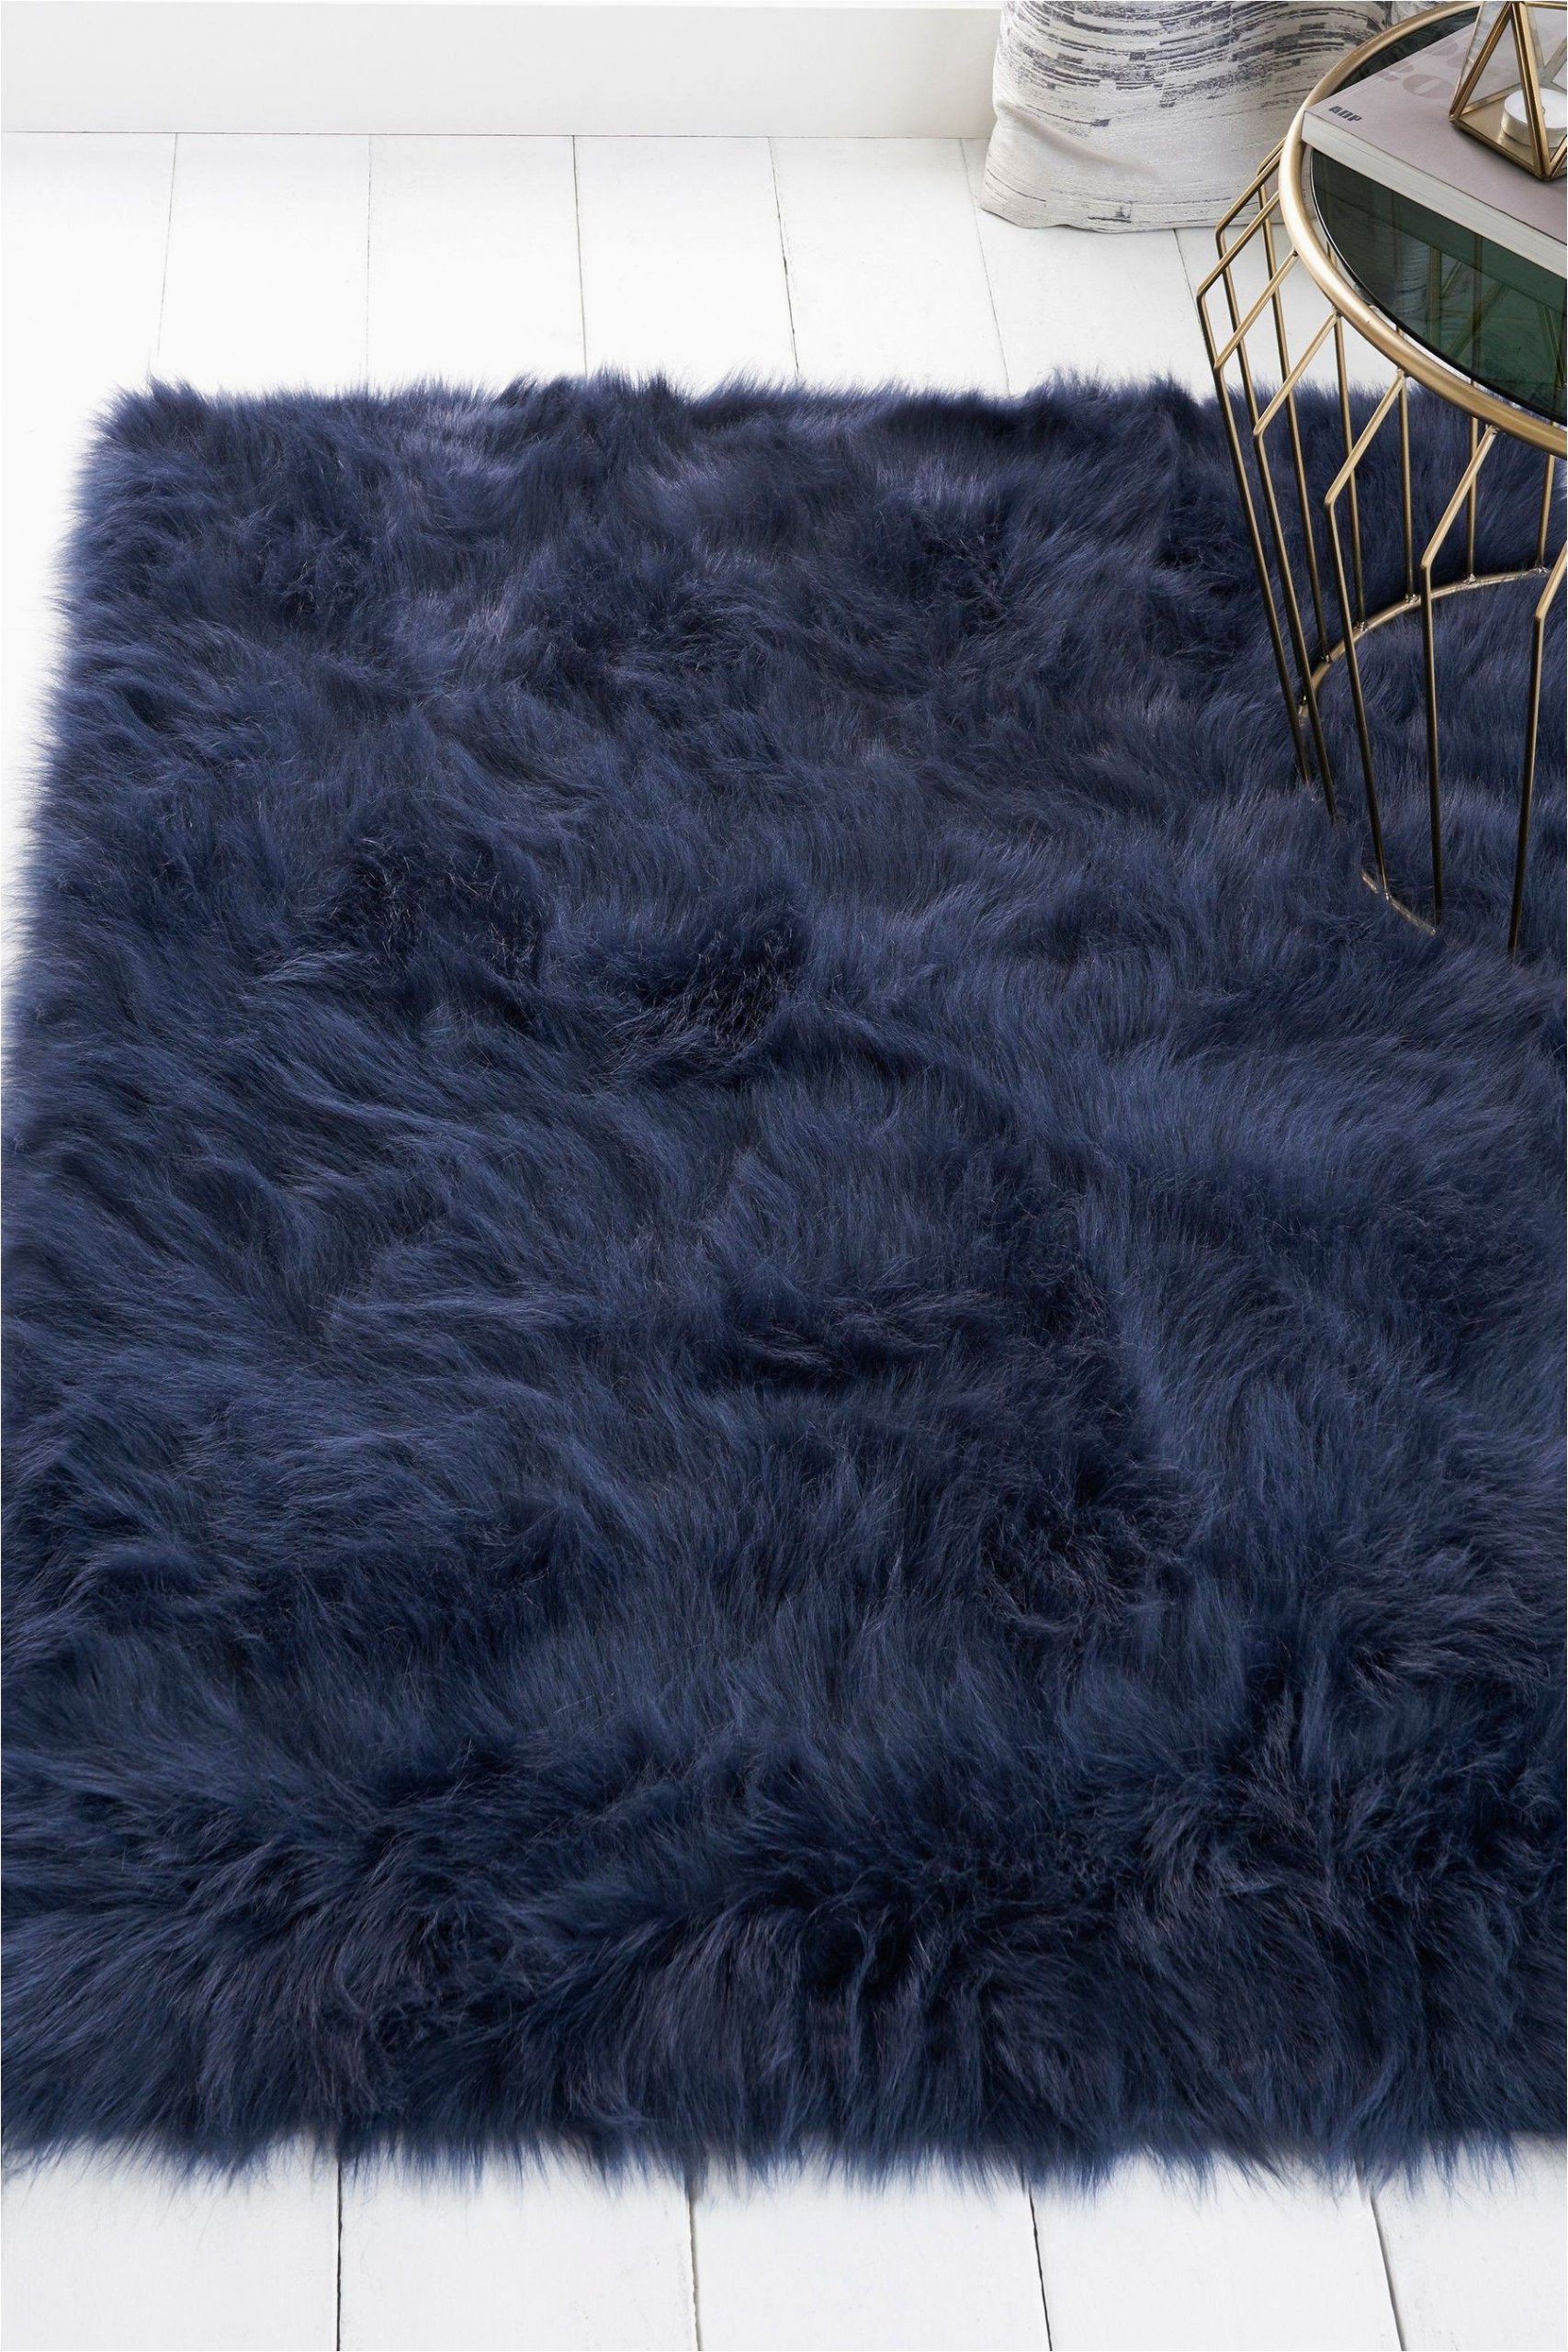 Fur area Rugs for Sale Next Faux Sheepskin Rug Blue